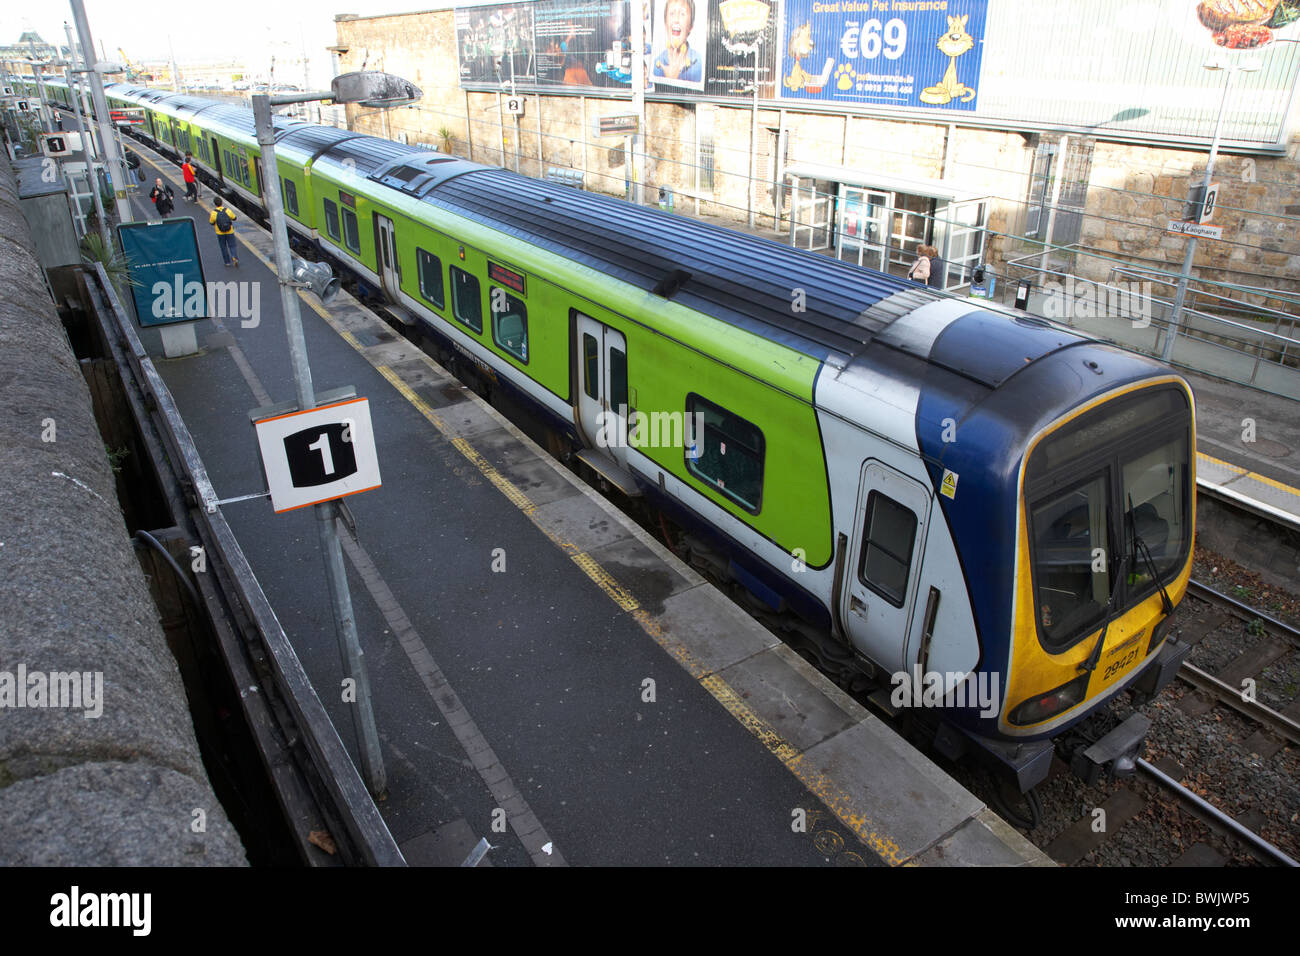 dart train in dun laoghaire train station Dublin republic of ireland Stock Photo